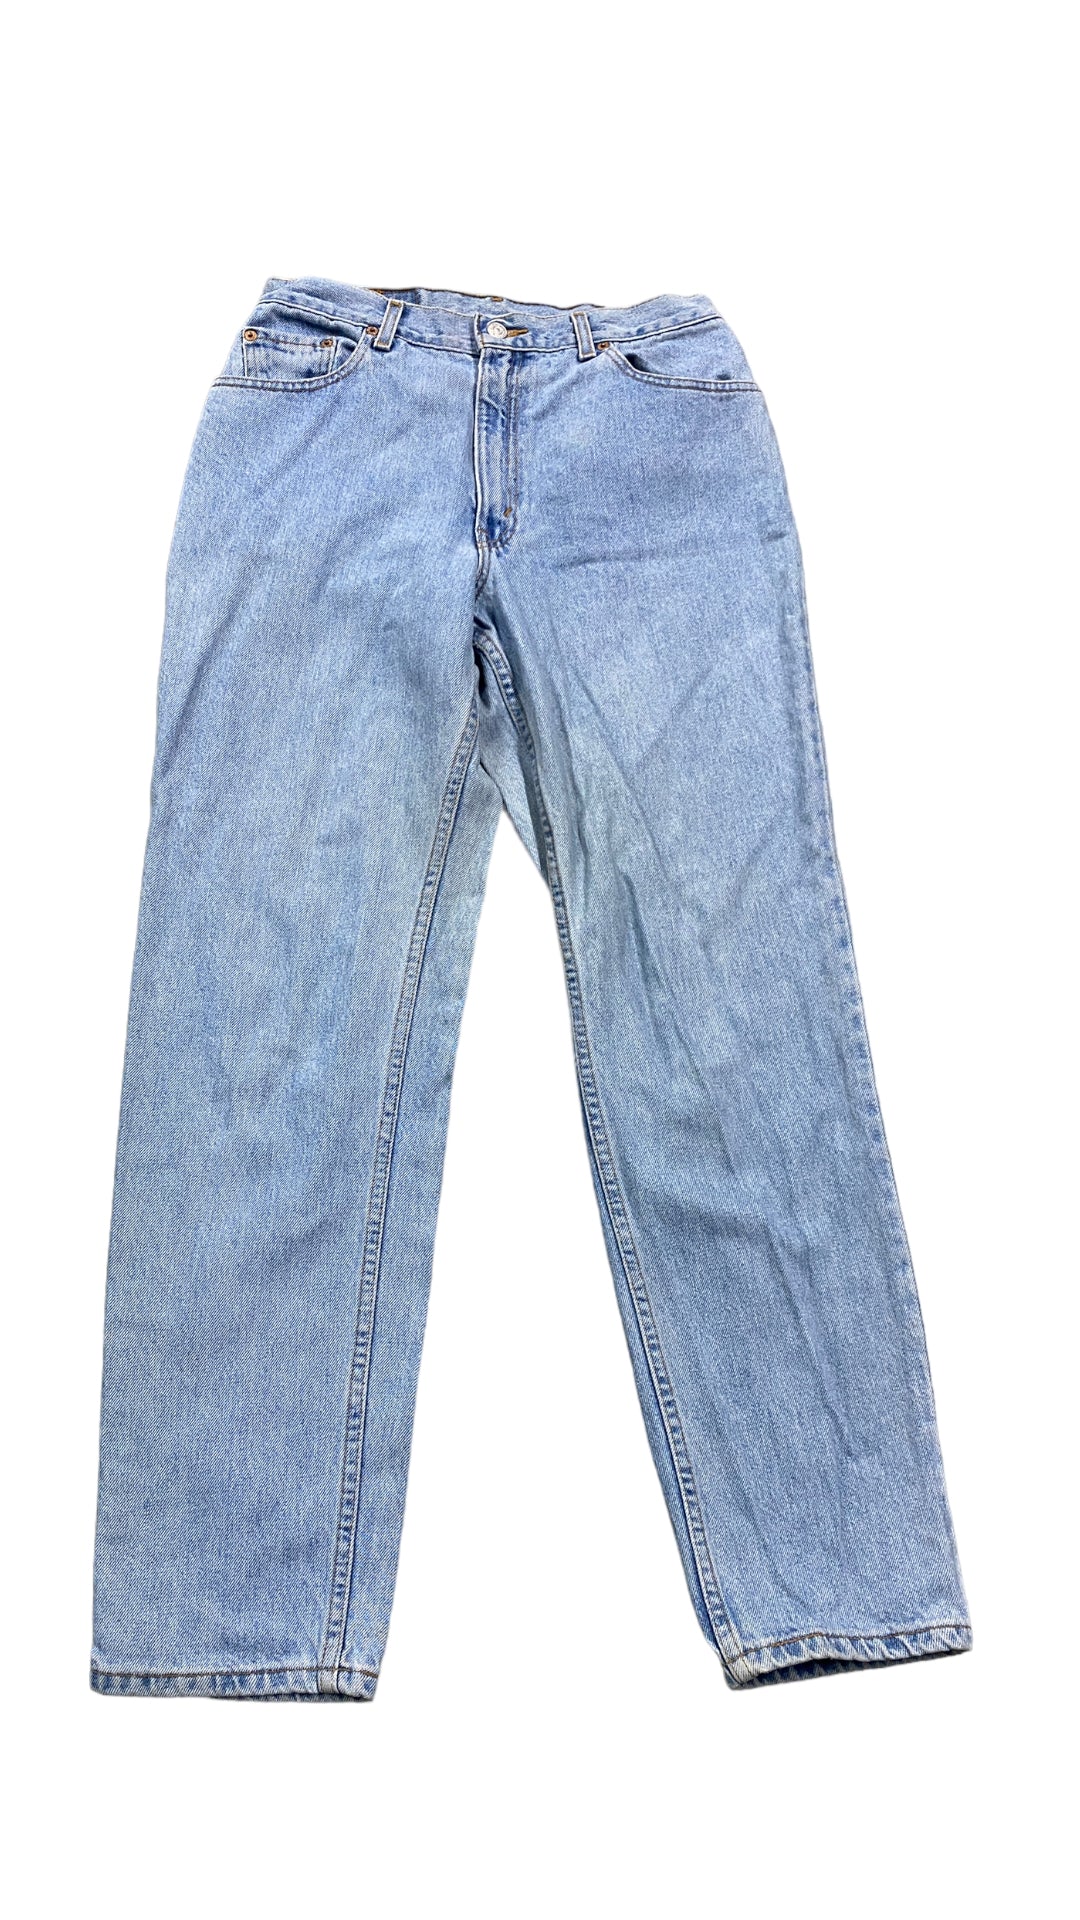 VTG Wmn's Levi's 550 Light Blue Denim Jeans Sz 28